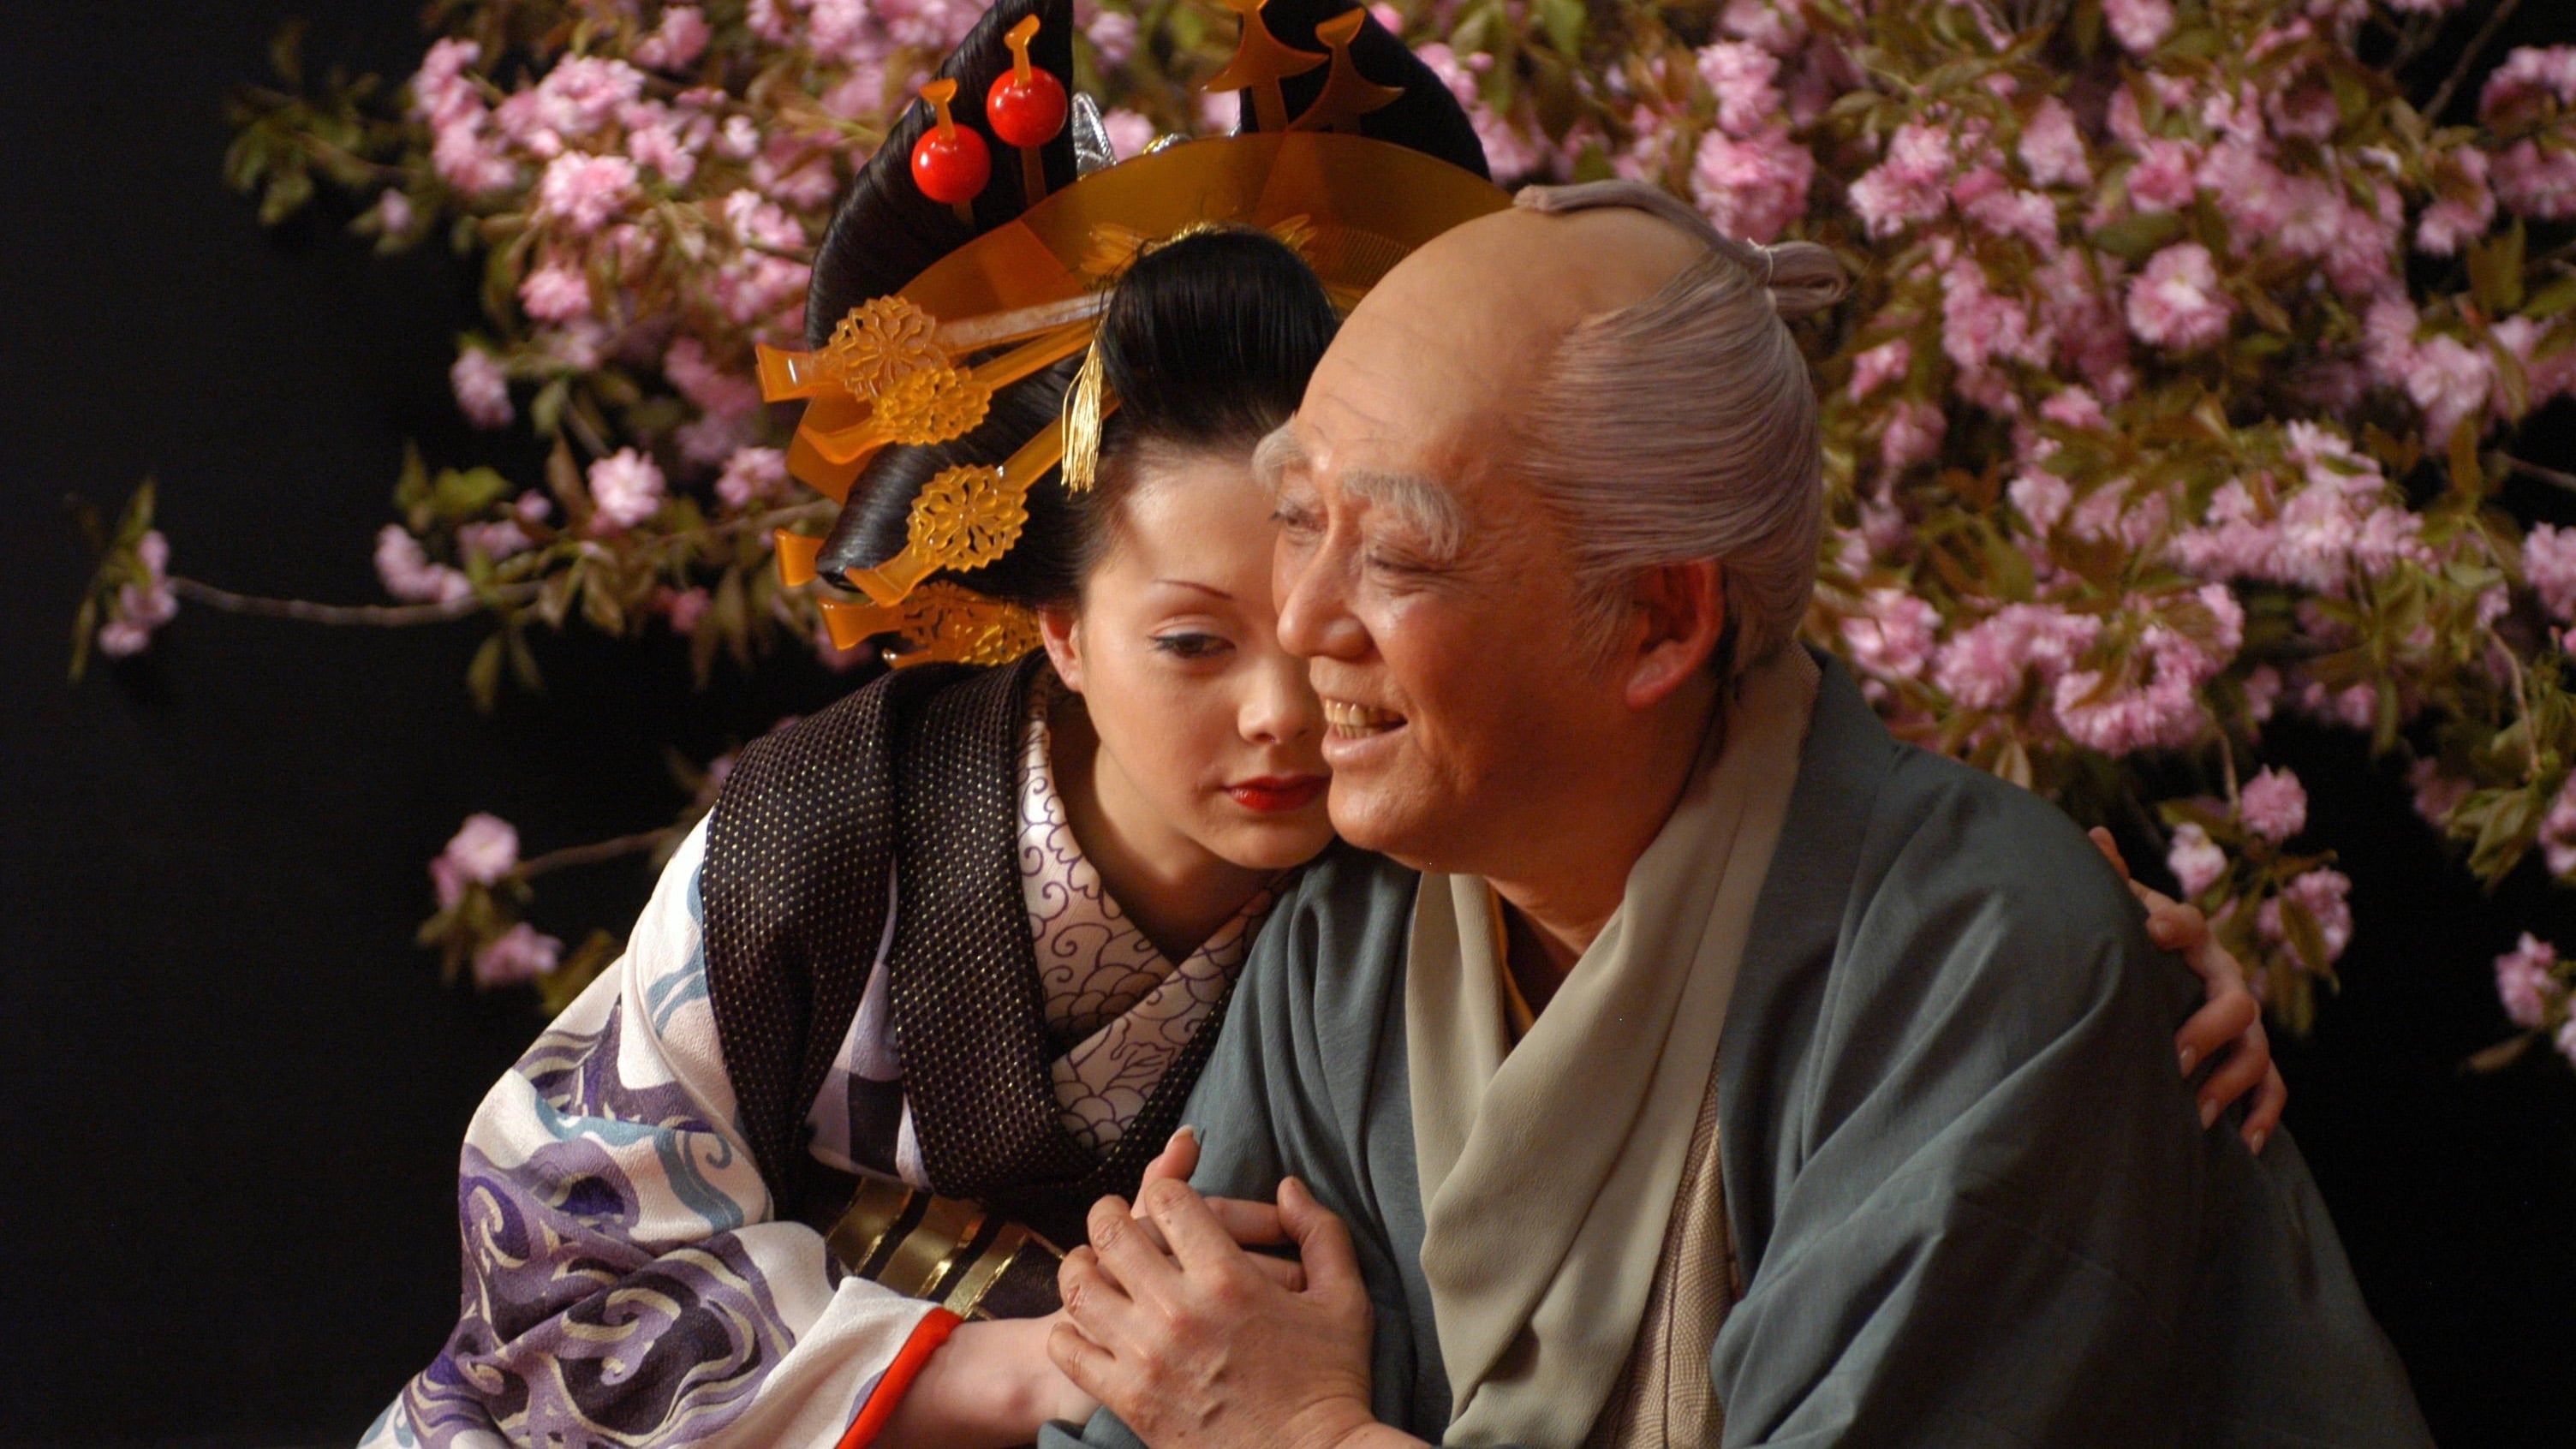 Сакуран (2006)